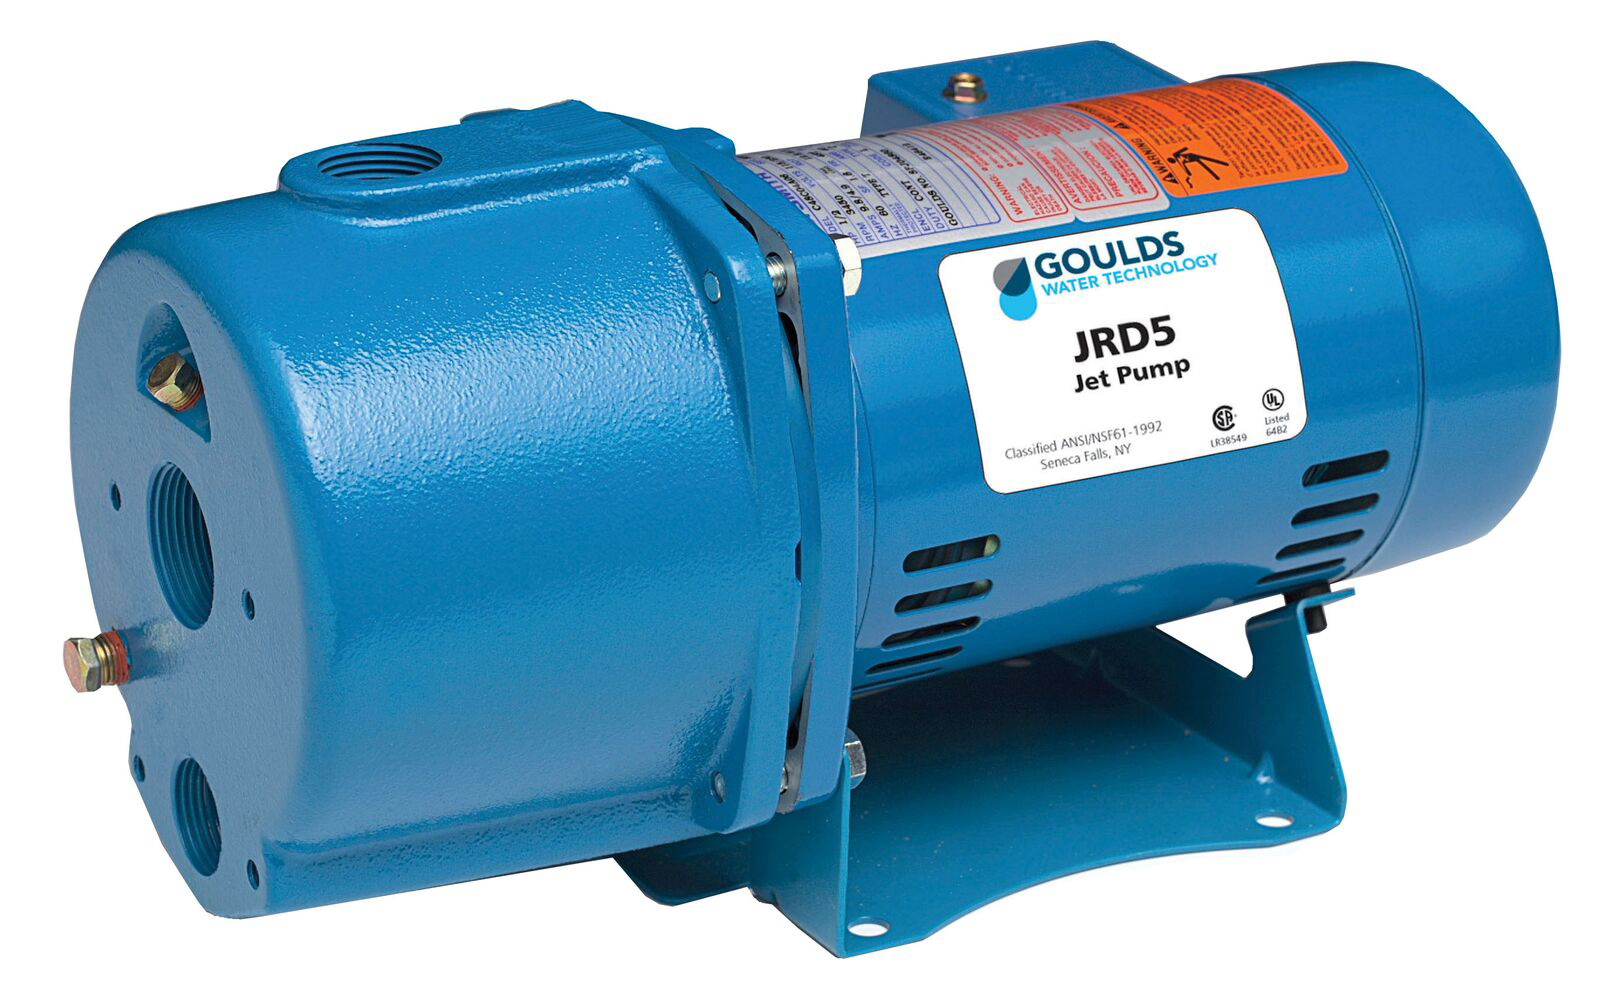 Goulds J7 3/4 HP Convertible Water Well Jet Pump 115/230V 1PH